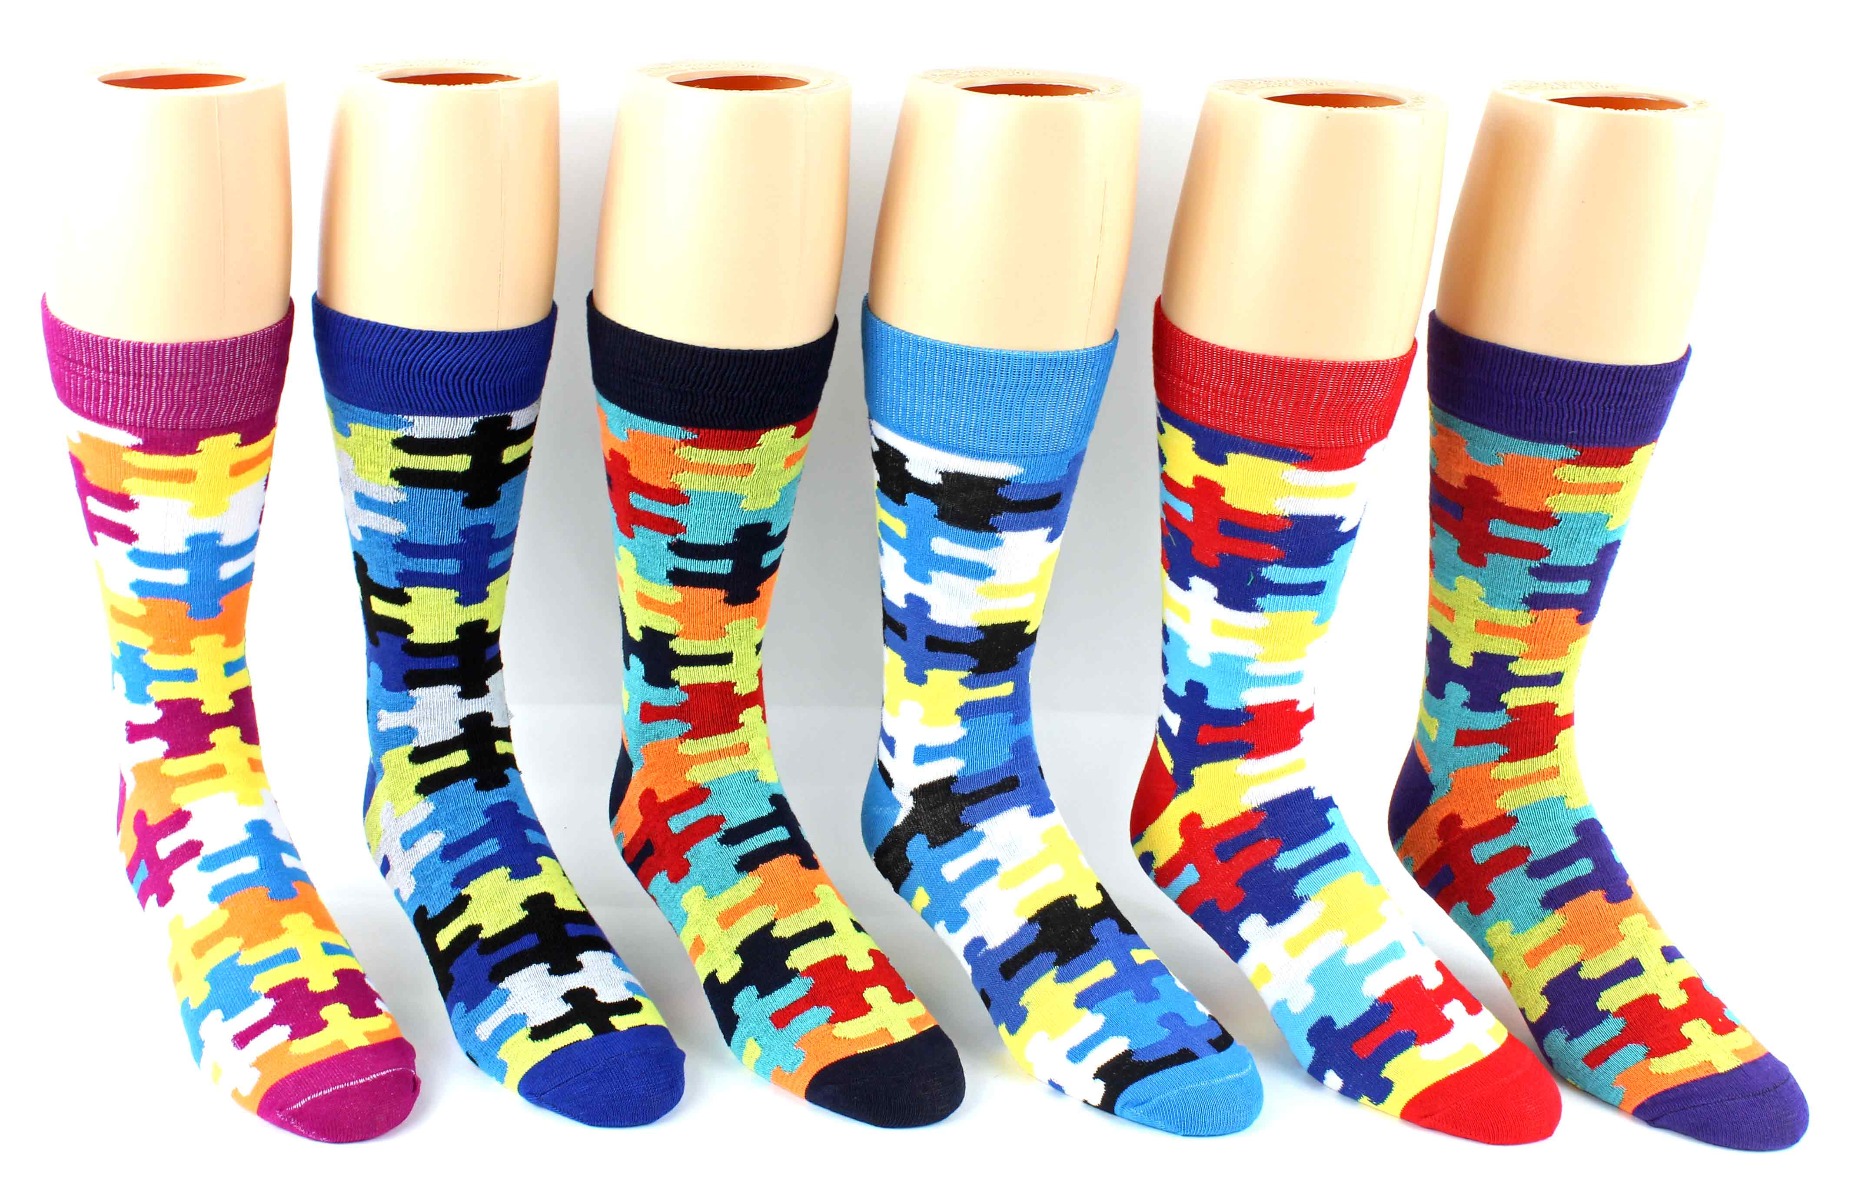 Men's Casual Crew Dress Socks for Autism Awareness - PUZZLE Prints - Size 10-13